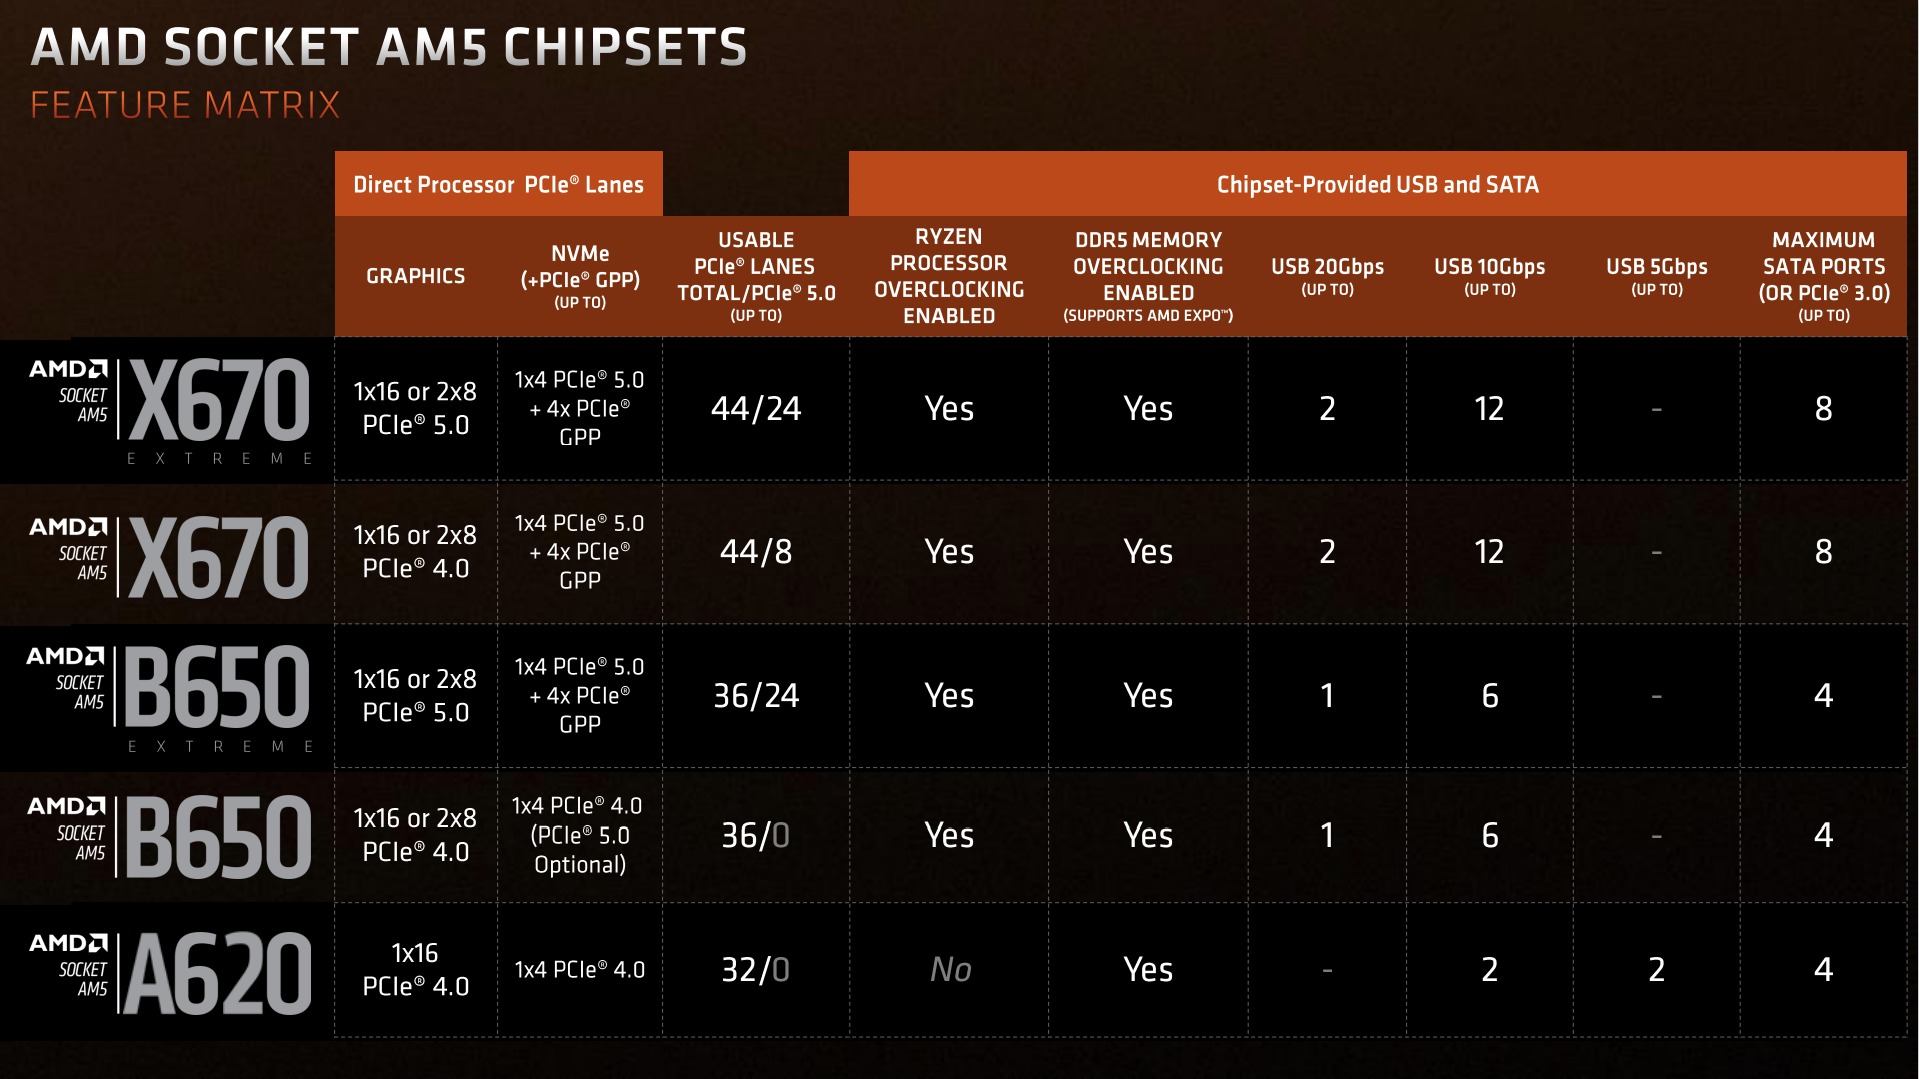 AMD-A620-chipset-1-1.jpg